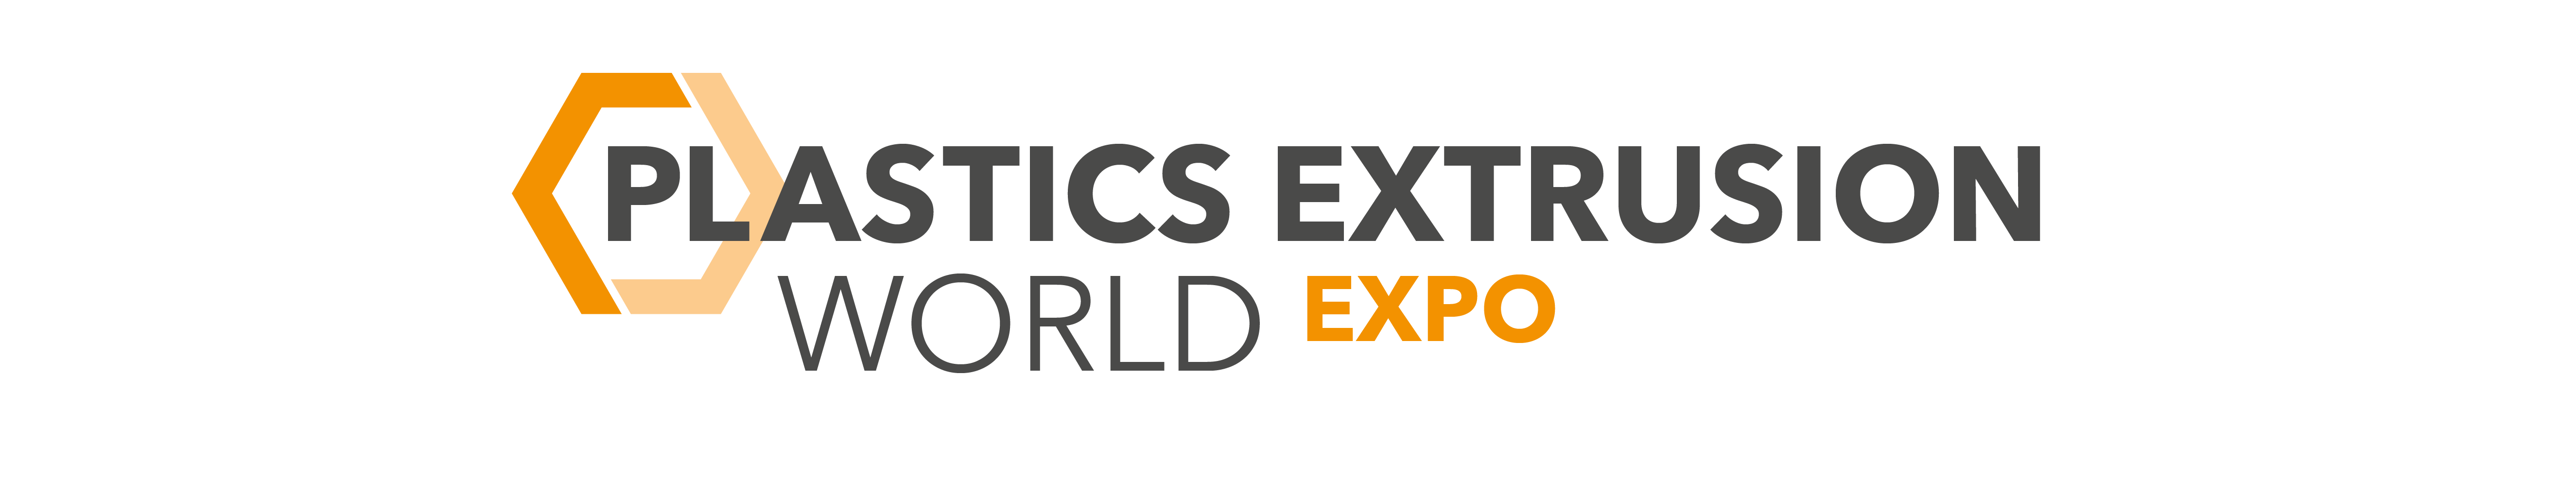 Plastics Extrusion World Expo logo